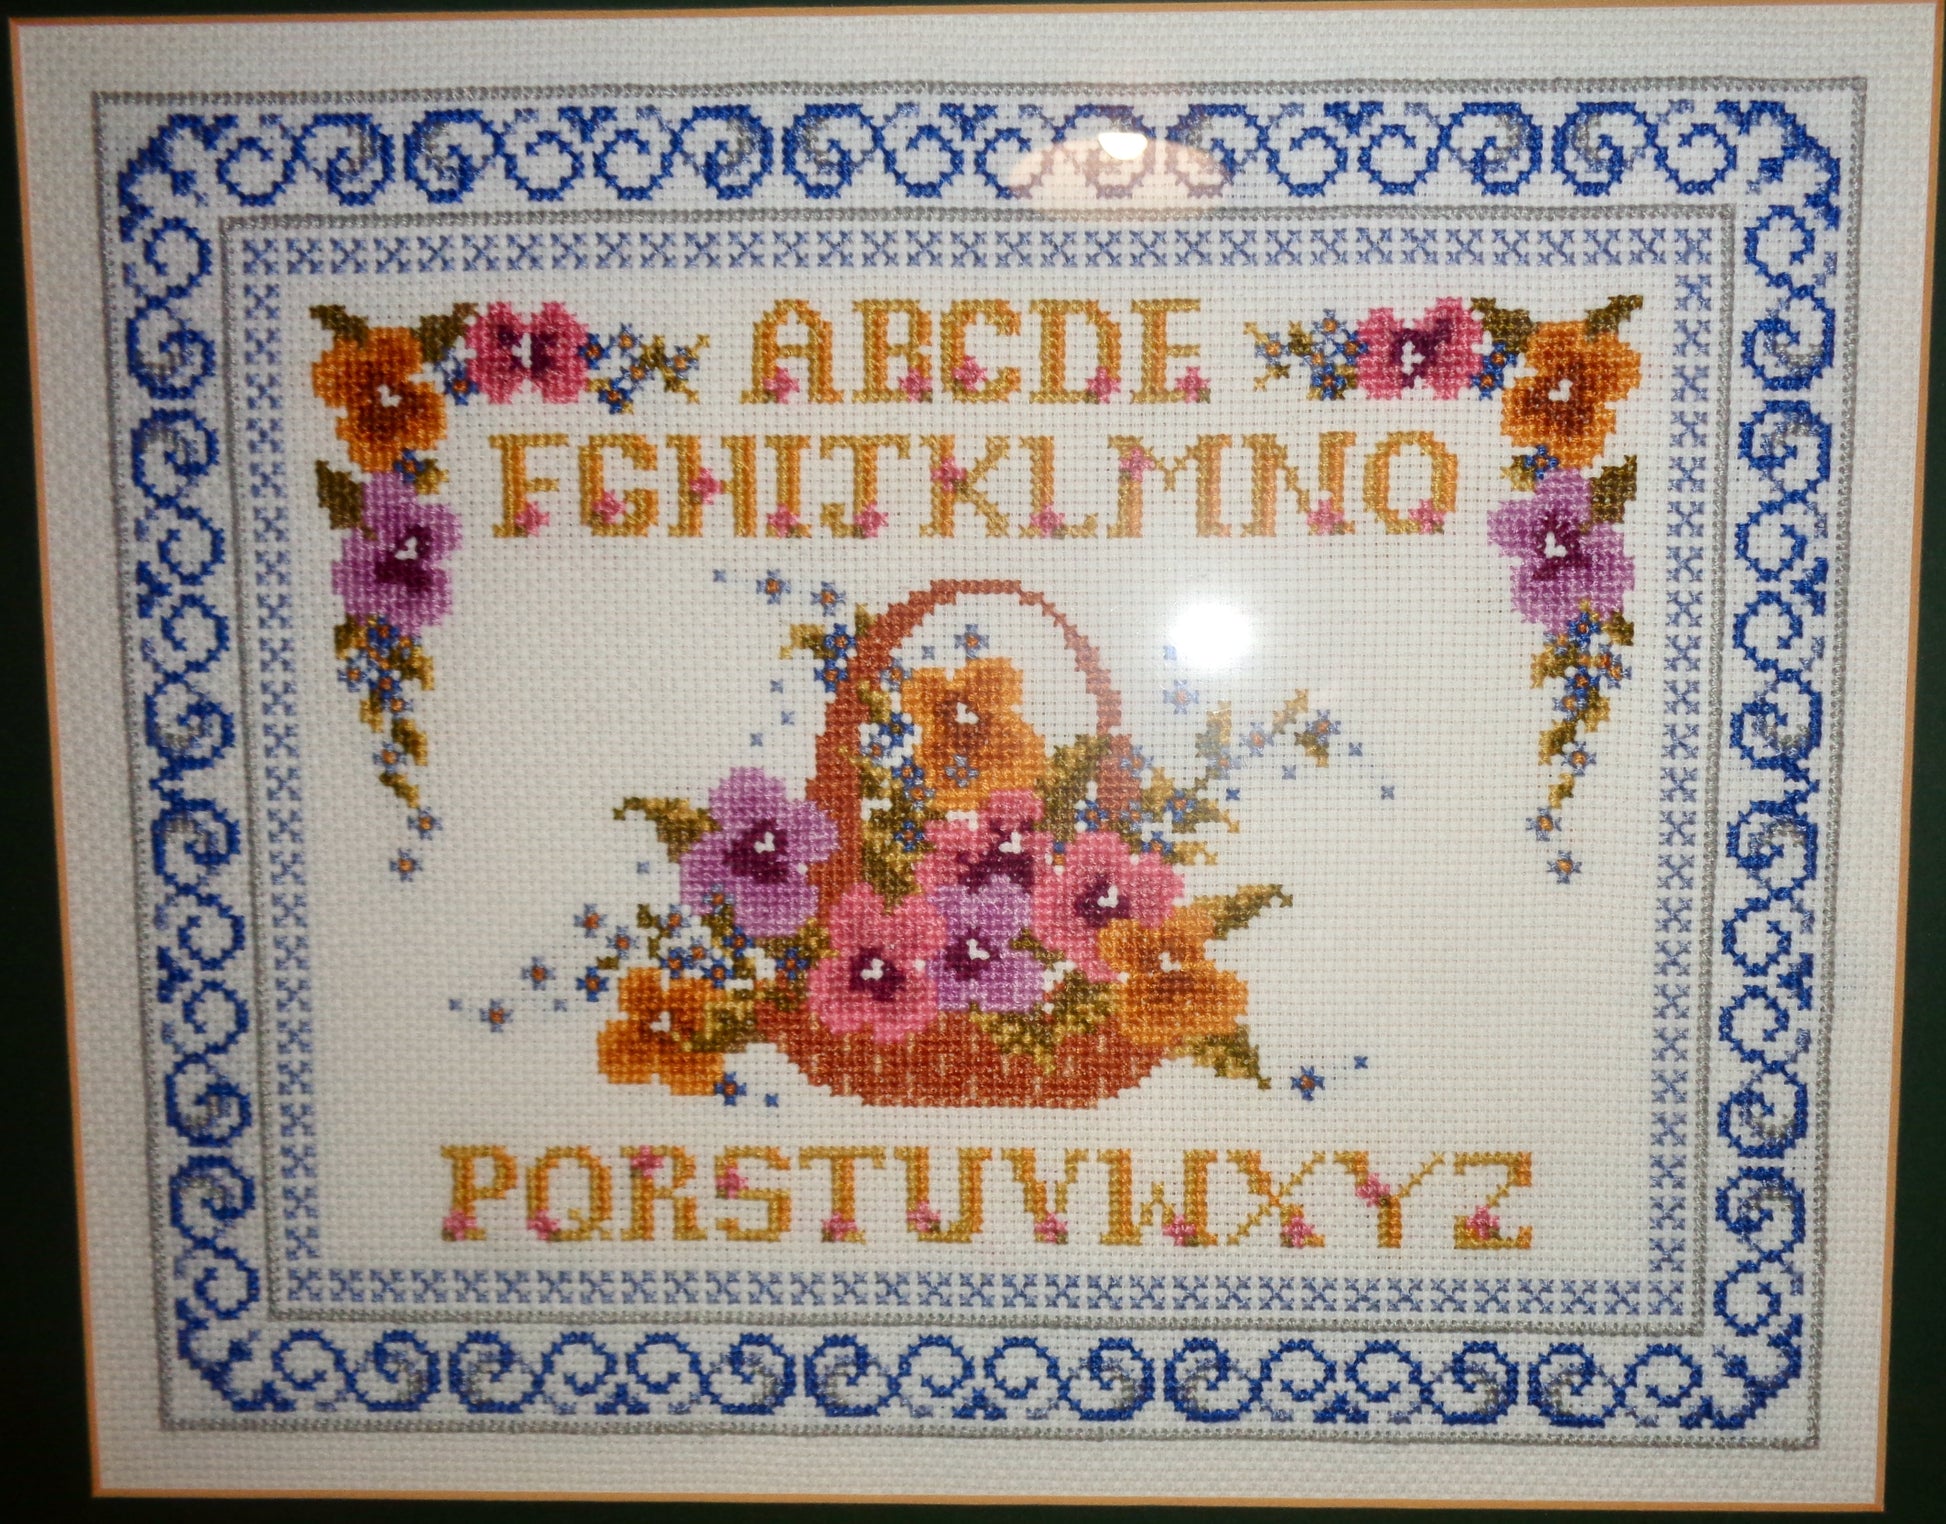 Framed Completed Floral Alphabet Cross Stitch Sampler Embroidery